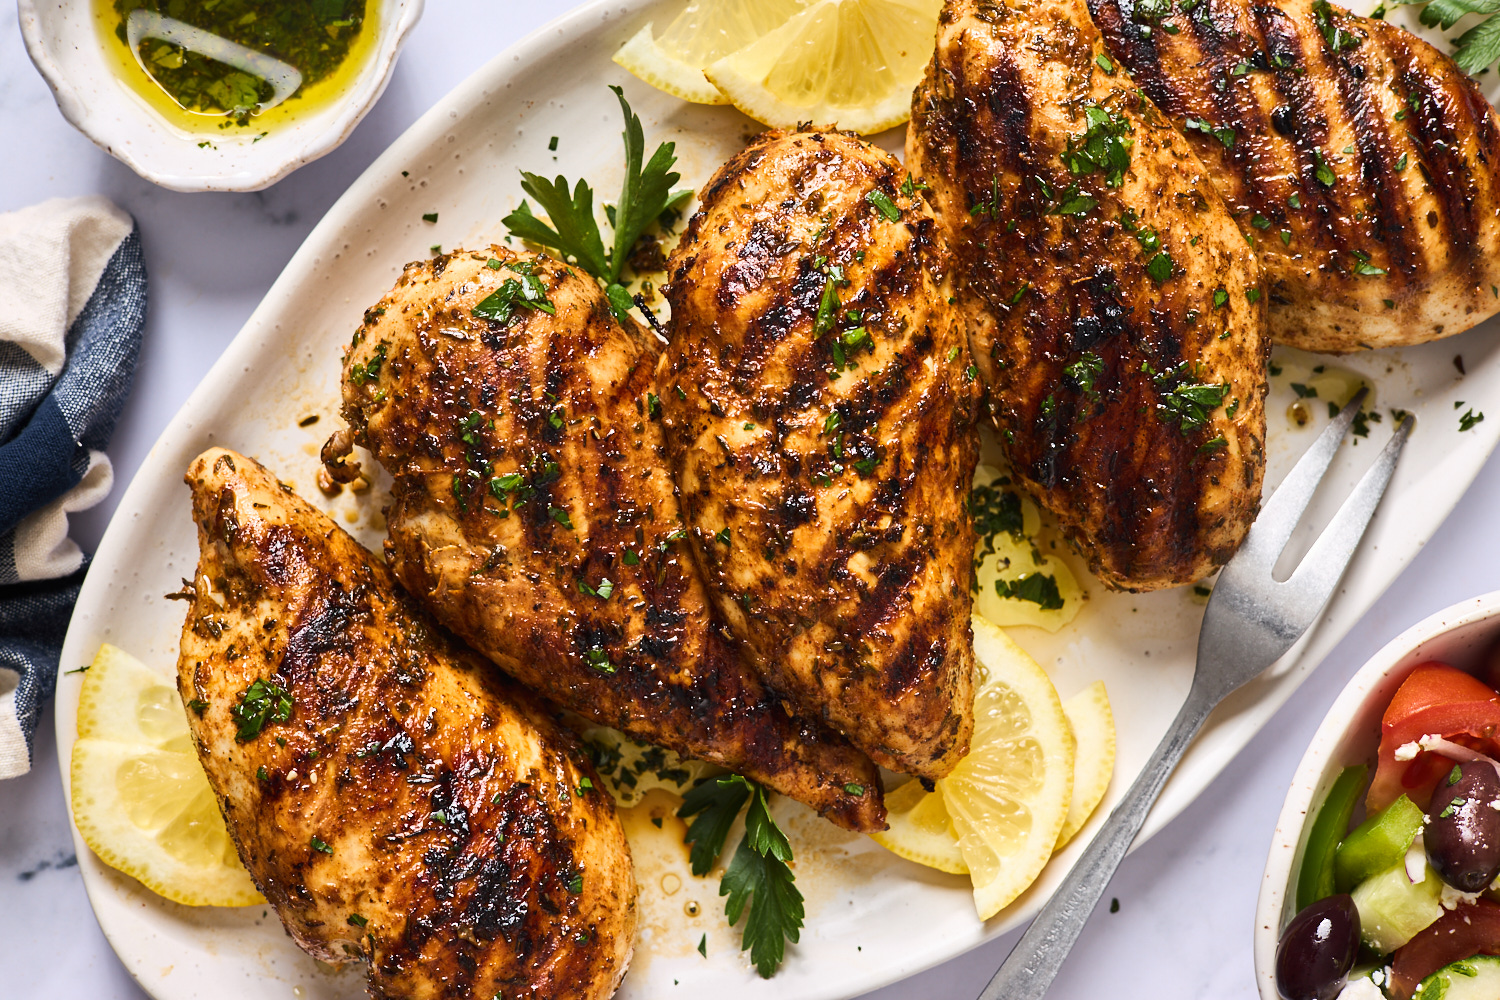  Greek Night In: Simple Grilled Chicken Marinade with Mediterranean Flair